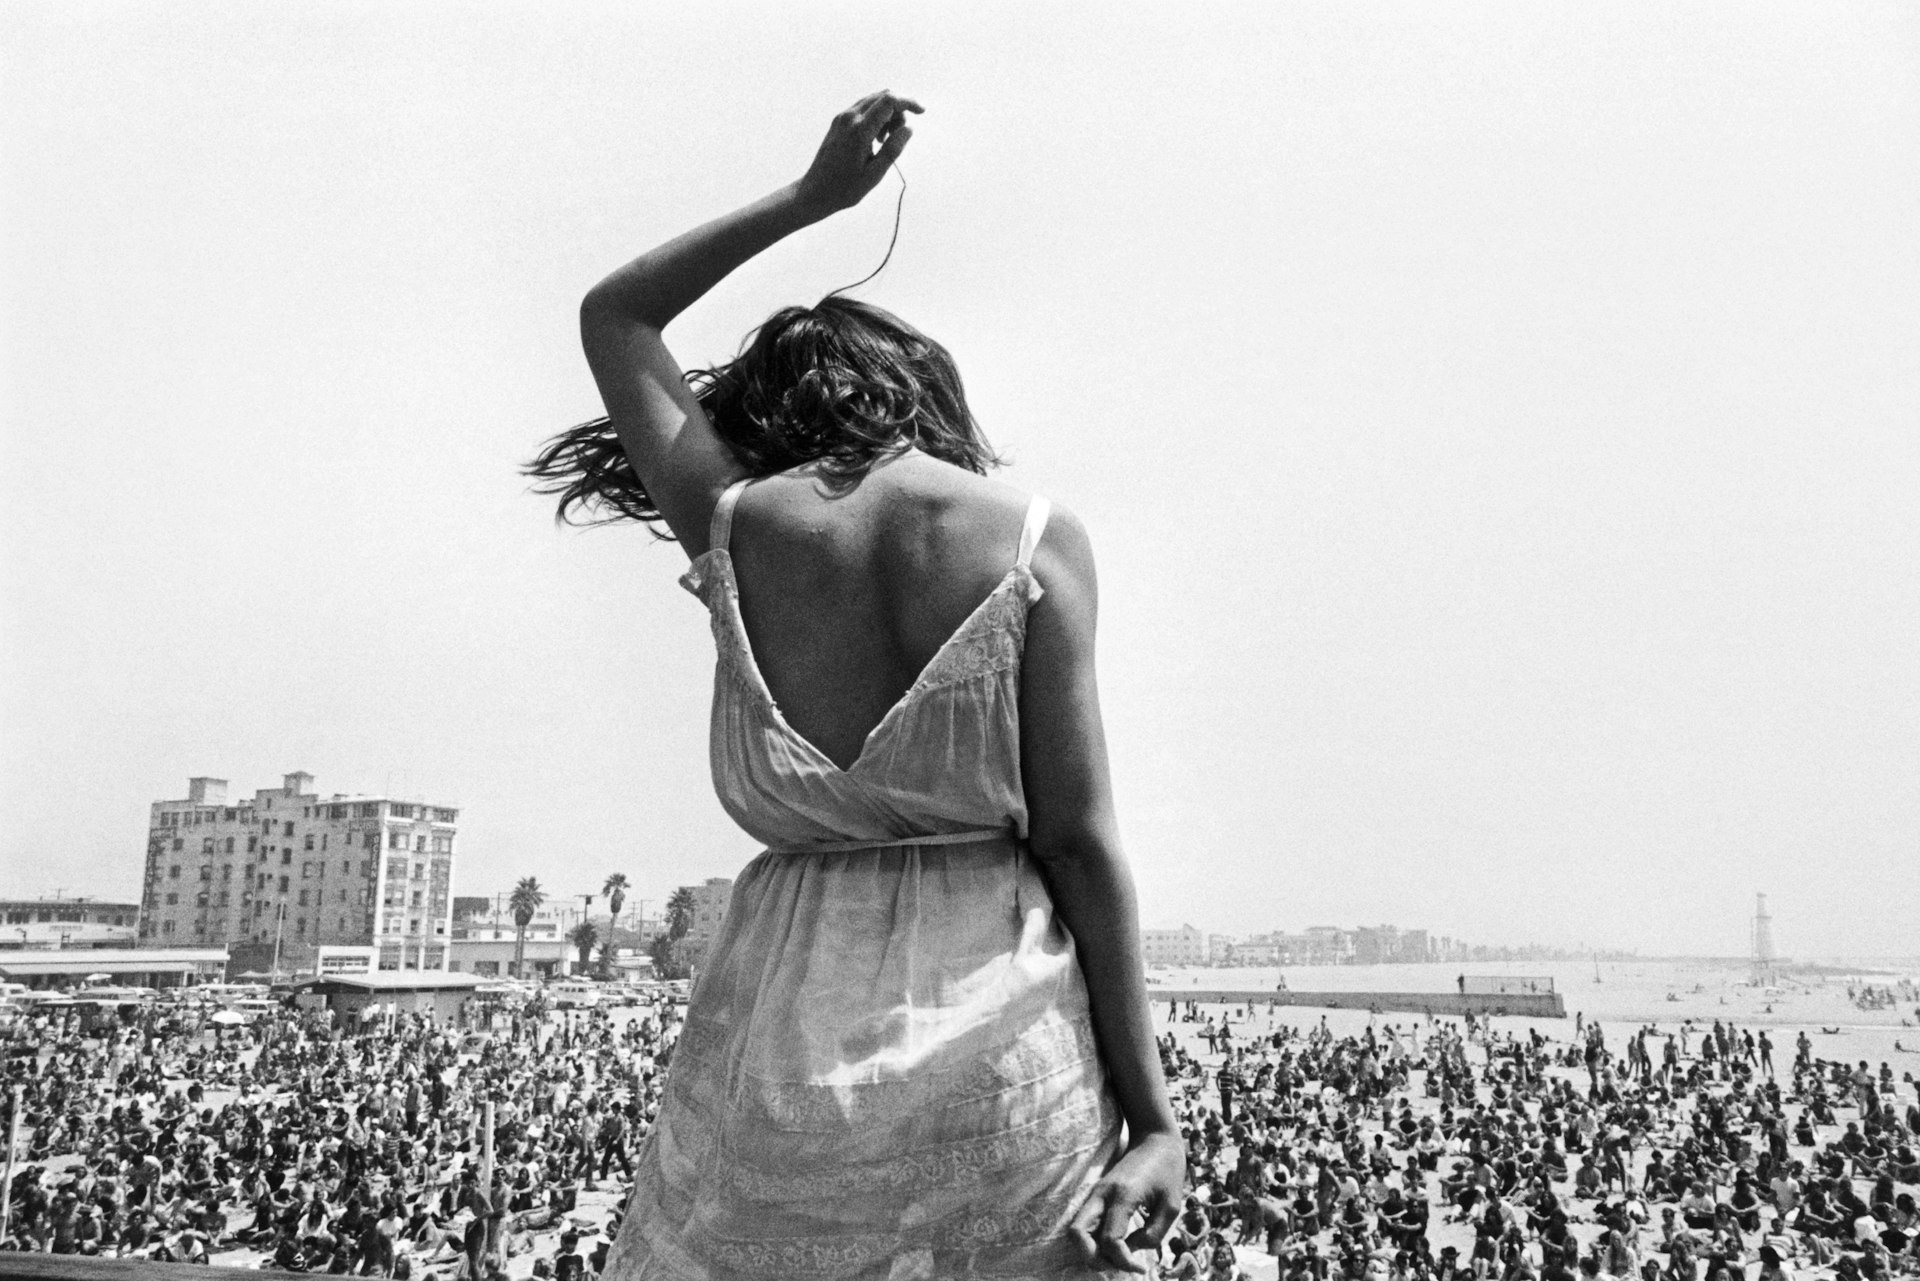 Venice Beach Rock Festival. California, USA. 1968 © Dennis Stock / Magnum Photos